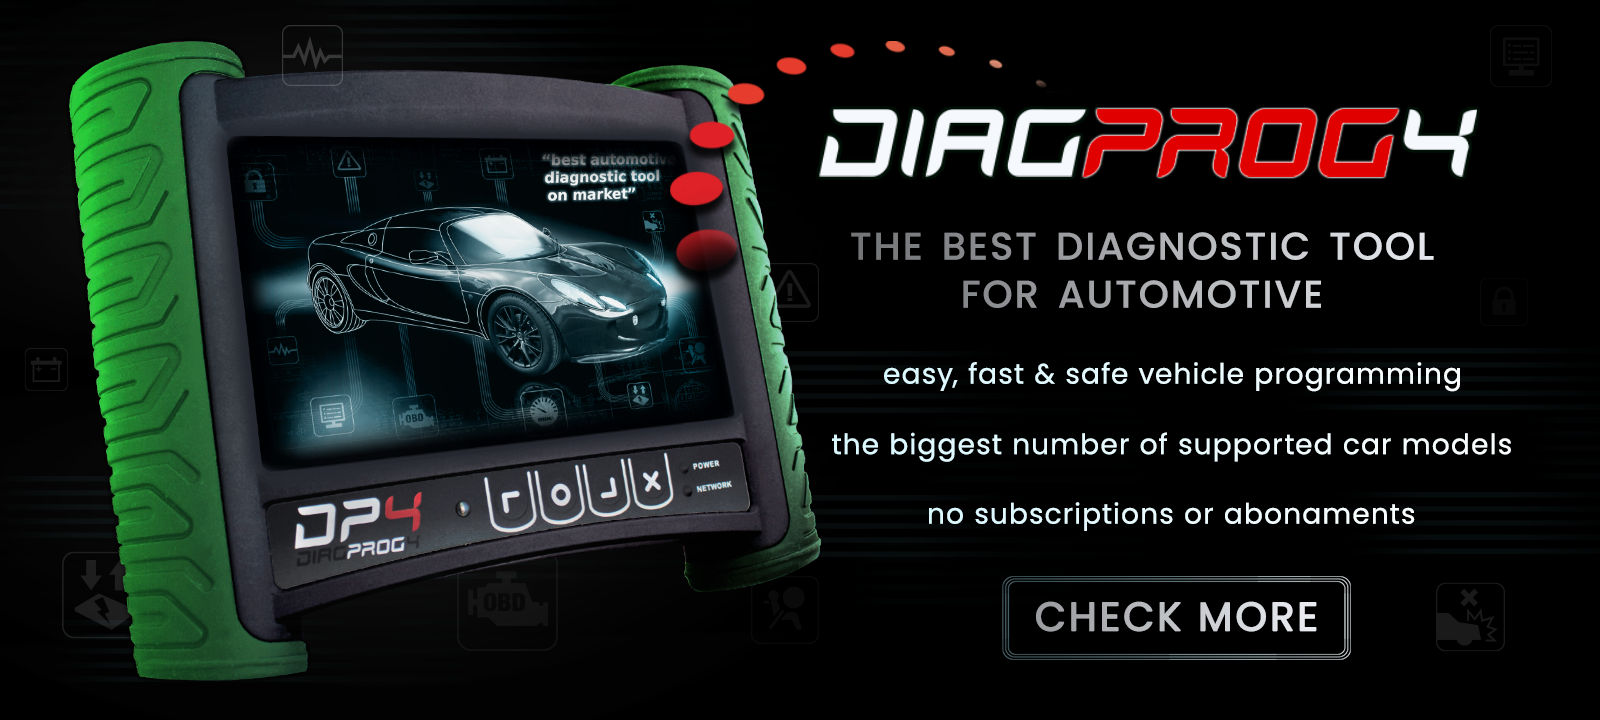 Diagprog4 Diagnostic Tester